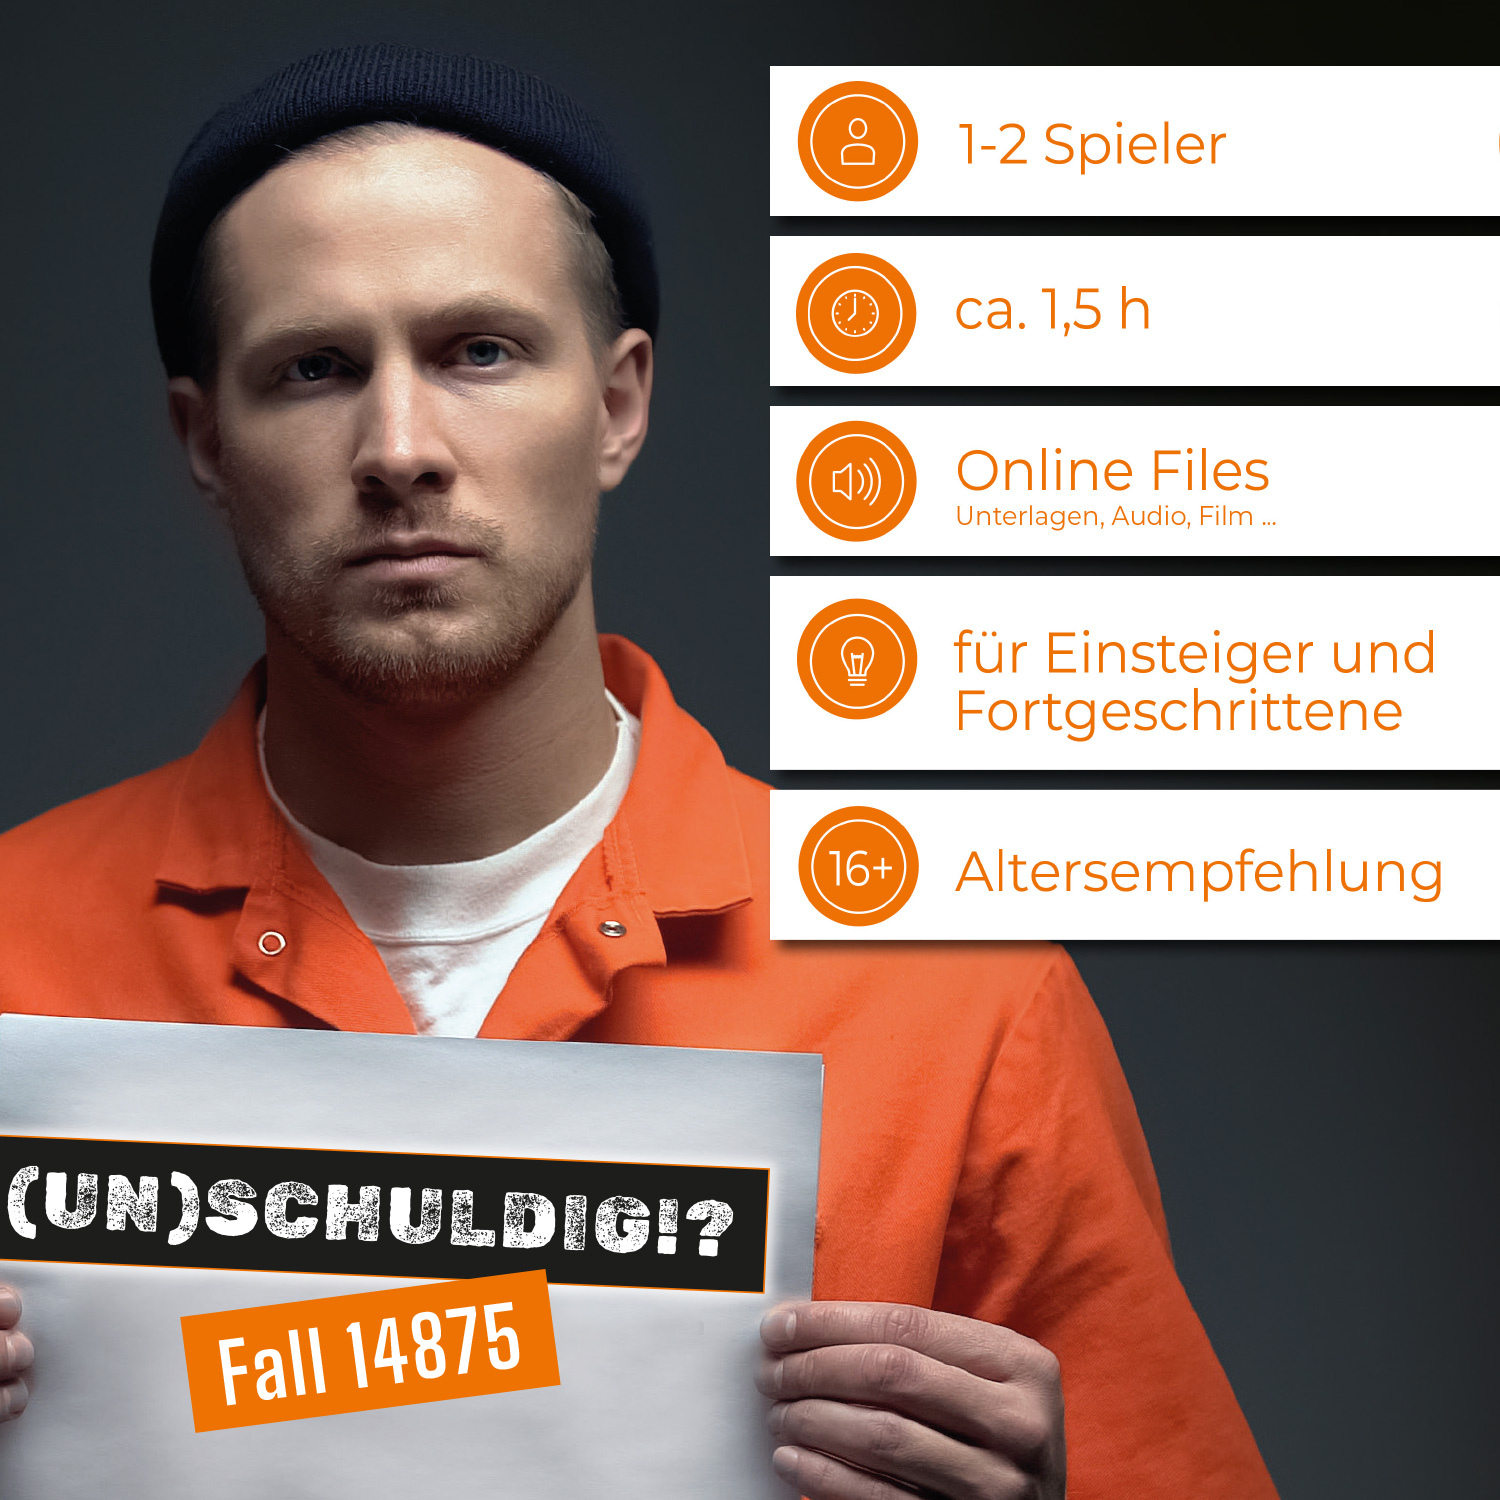 (Un)Schuldig!? – Fall14875 Lenox Kaufmann – Tatort Detektivspiel 1-2 Personen